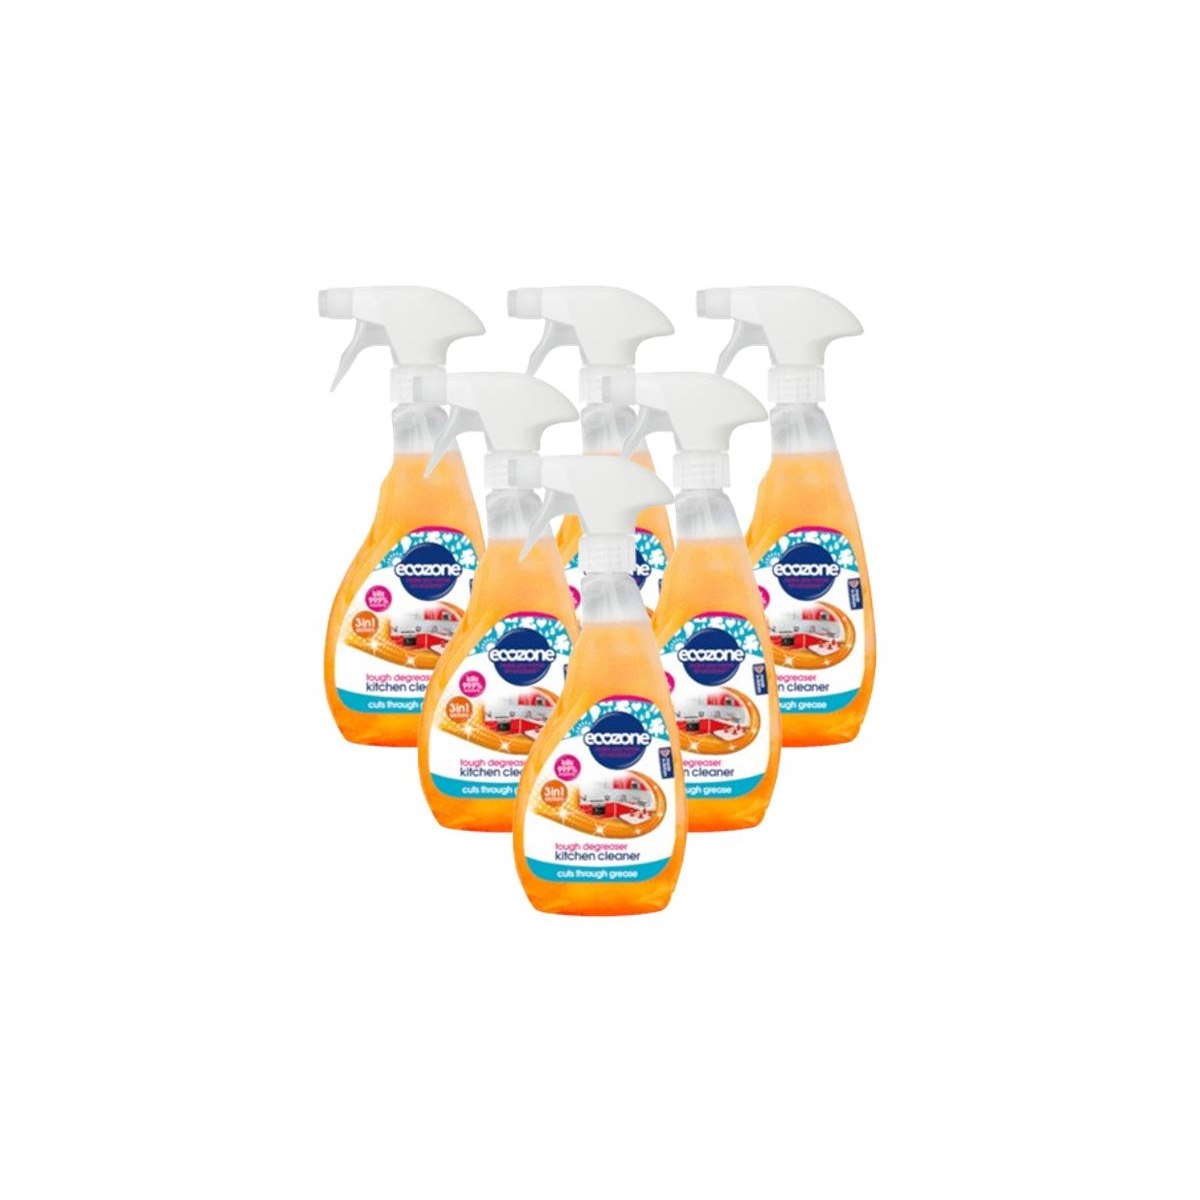 Case of 6 x Ecozone 3 in 1 Kitchen Cleaner Tough Degreaser Spray 500ml 